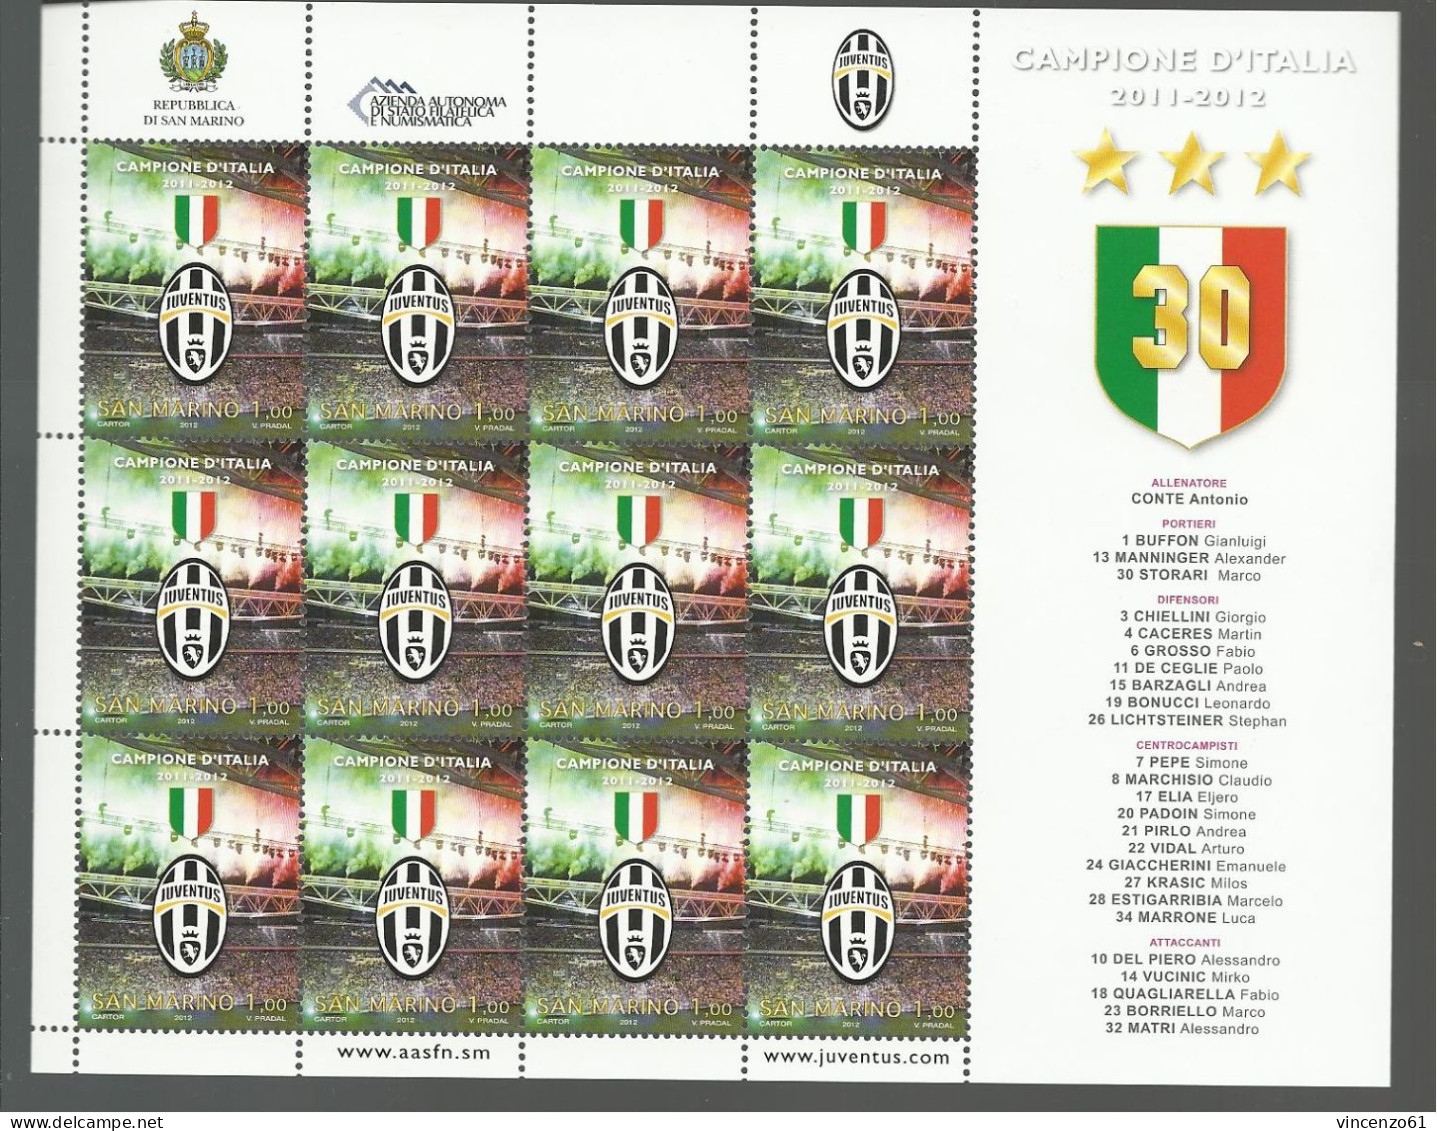 Repubblica Di San Marino, Juventus Campione D'italia 2011 2012 - Clubs Mythiques